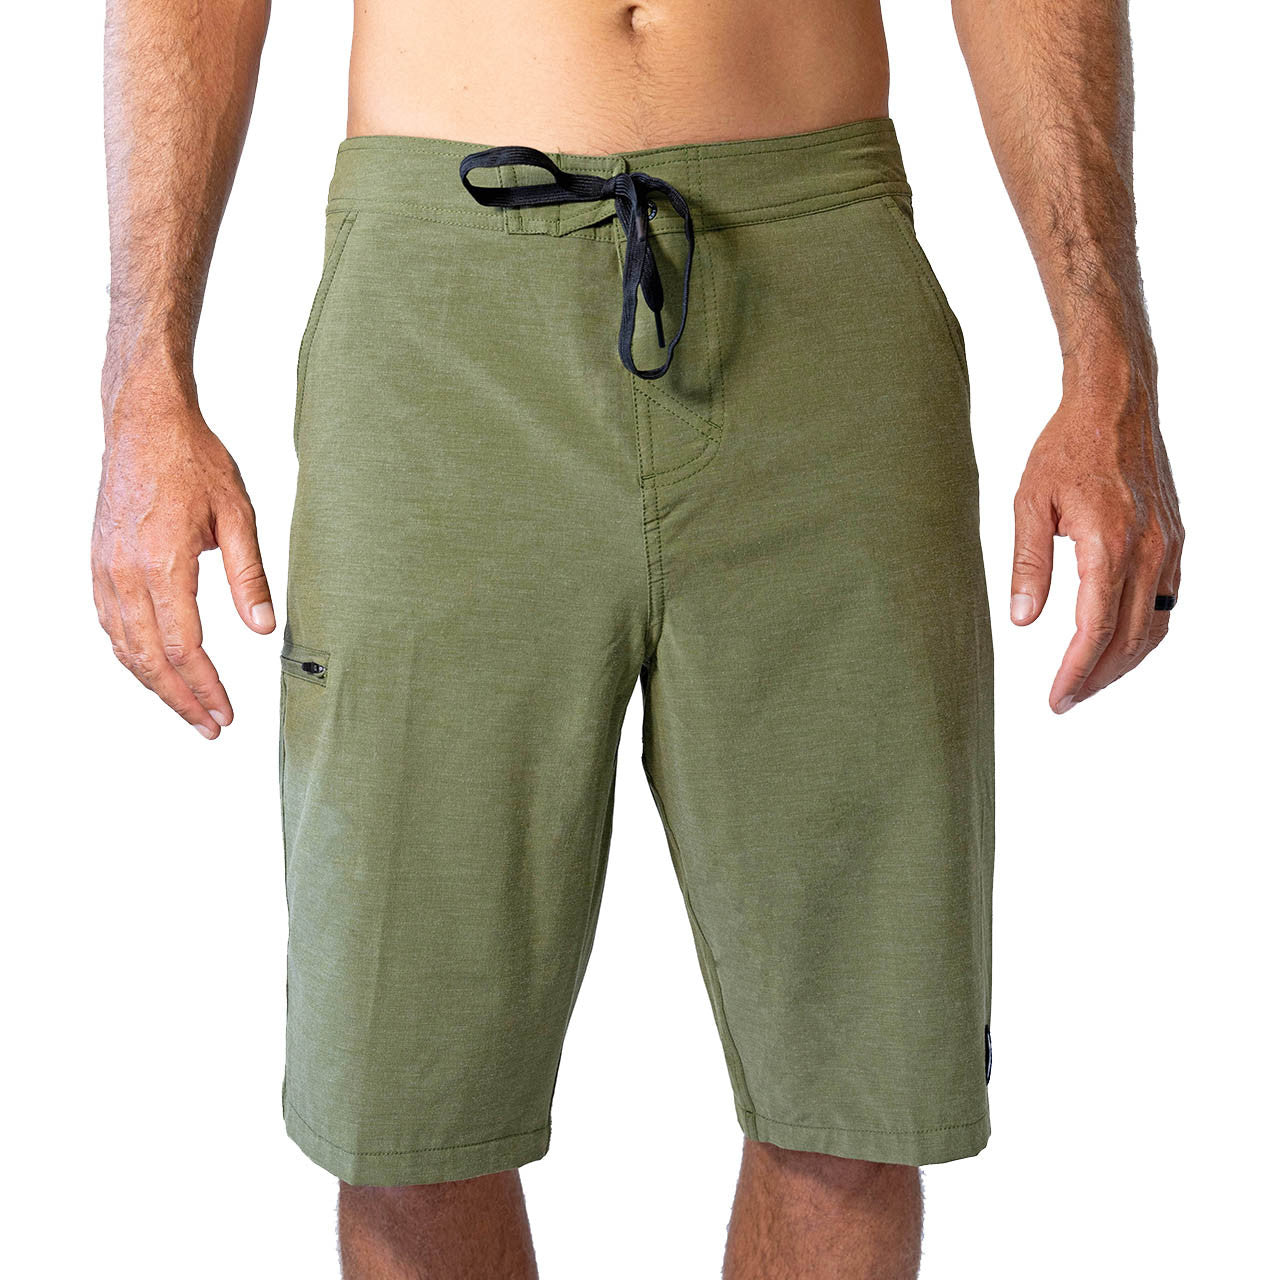 Maui Rippers Men's Board Shorts - Octo Tako, Triple Stitch Quick Dry Men's  Swim Trunks